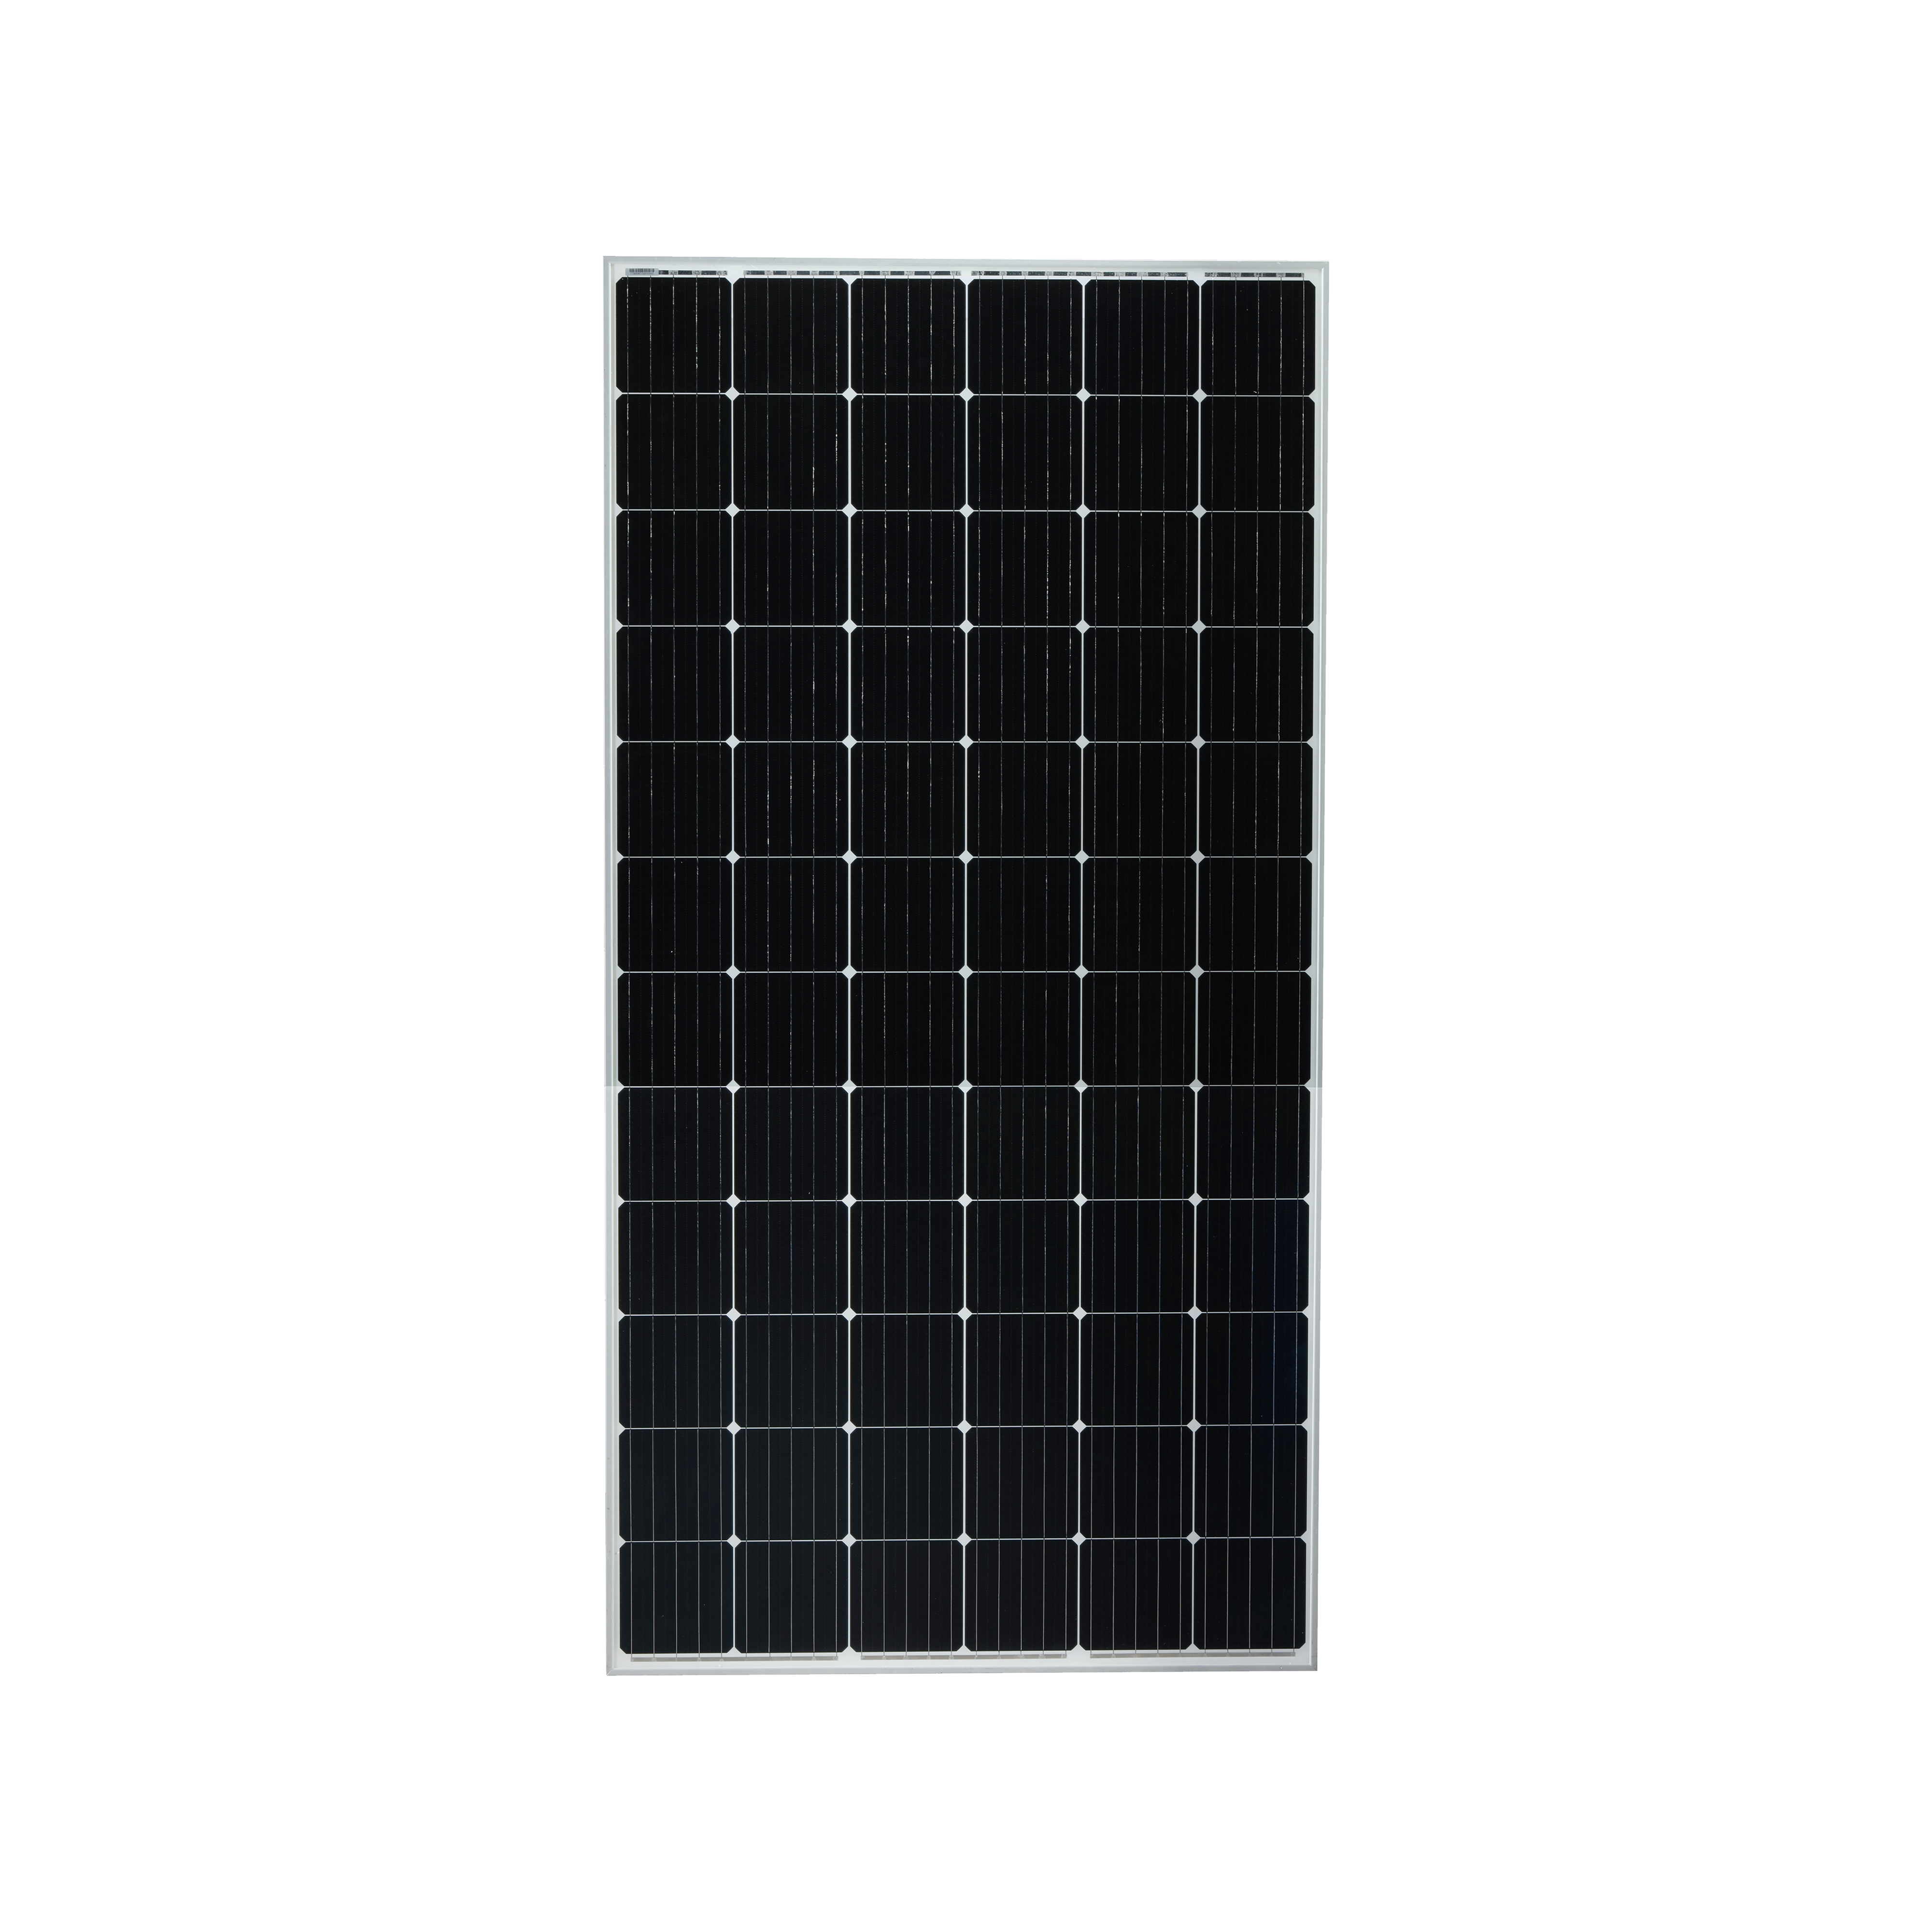 ZDNY-330C72 - Dahua 330W solar panel, monocrystalline silicon Certification